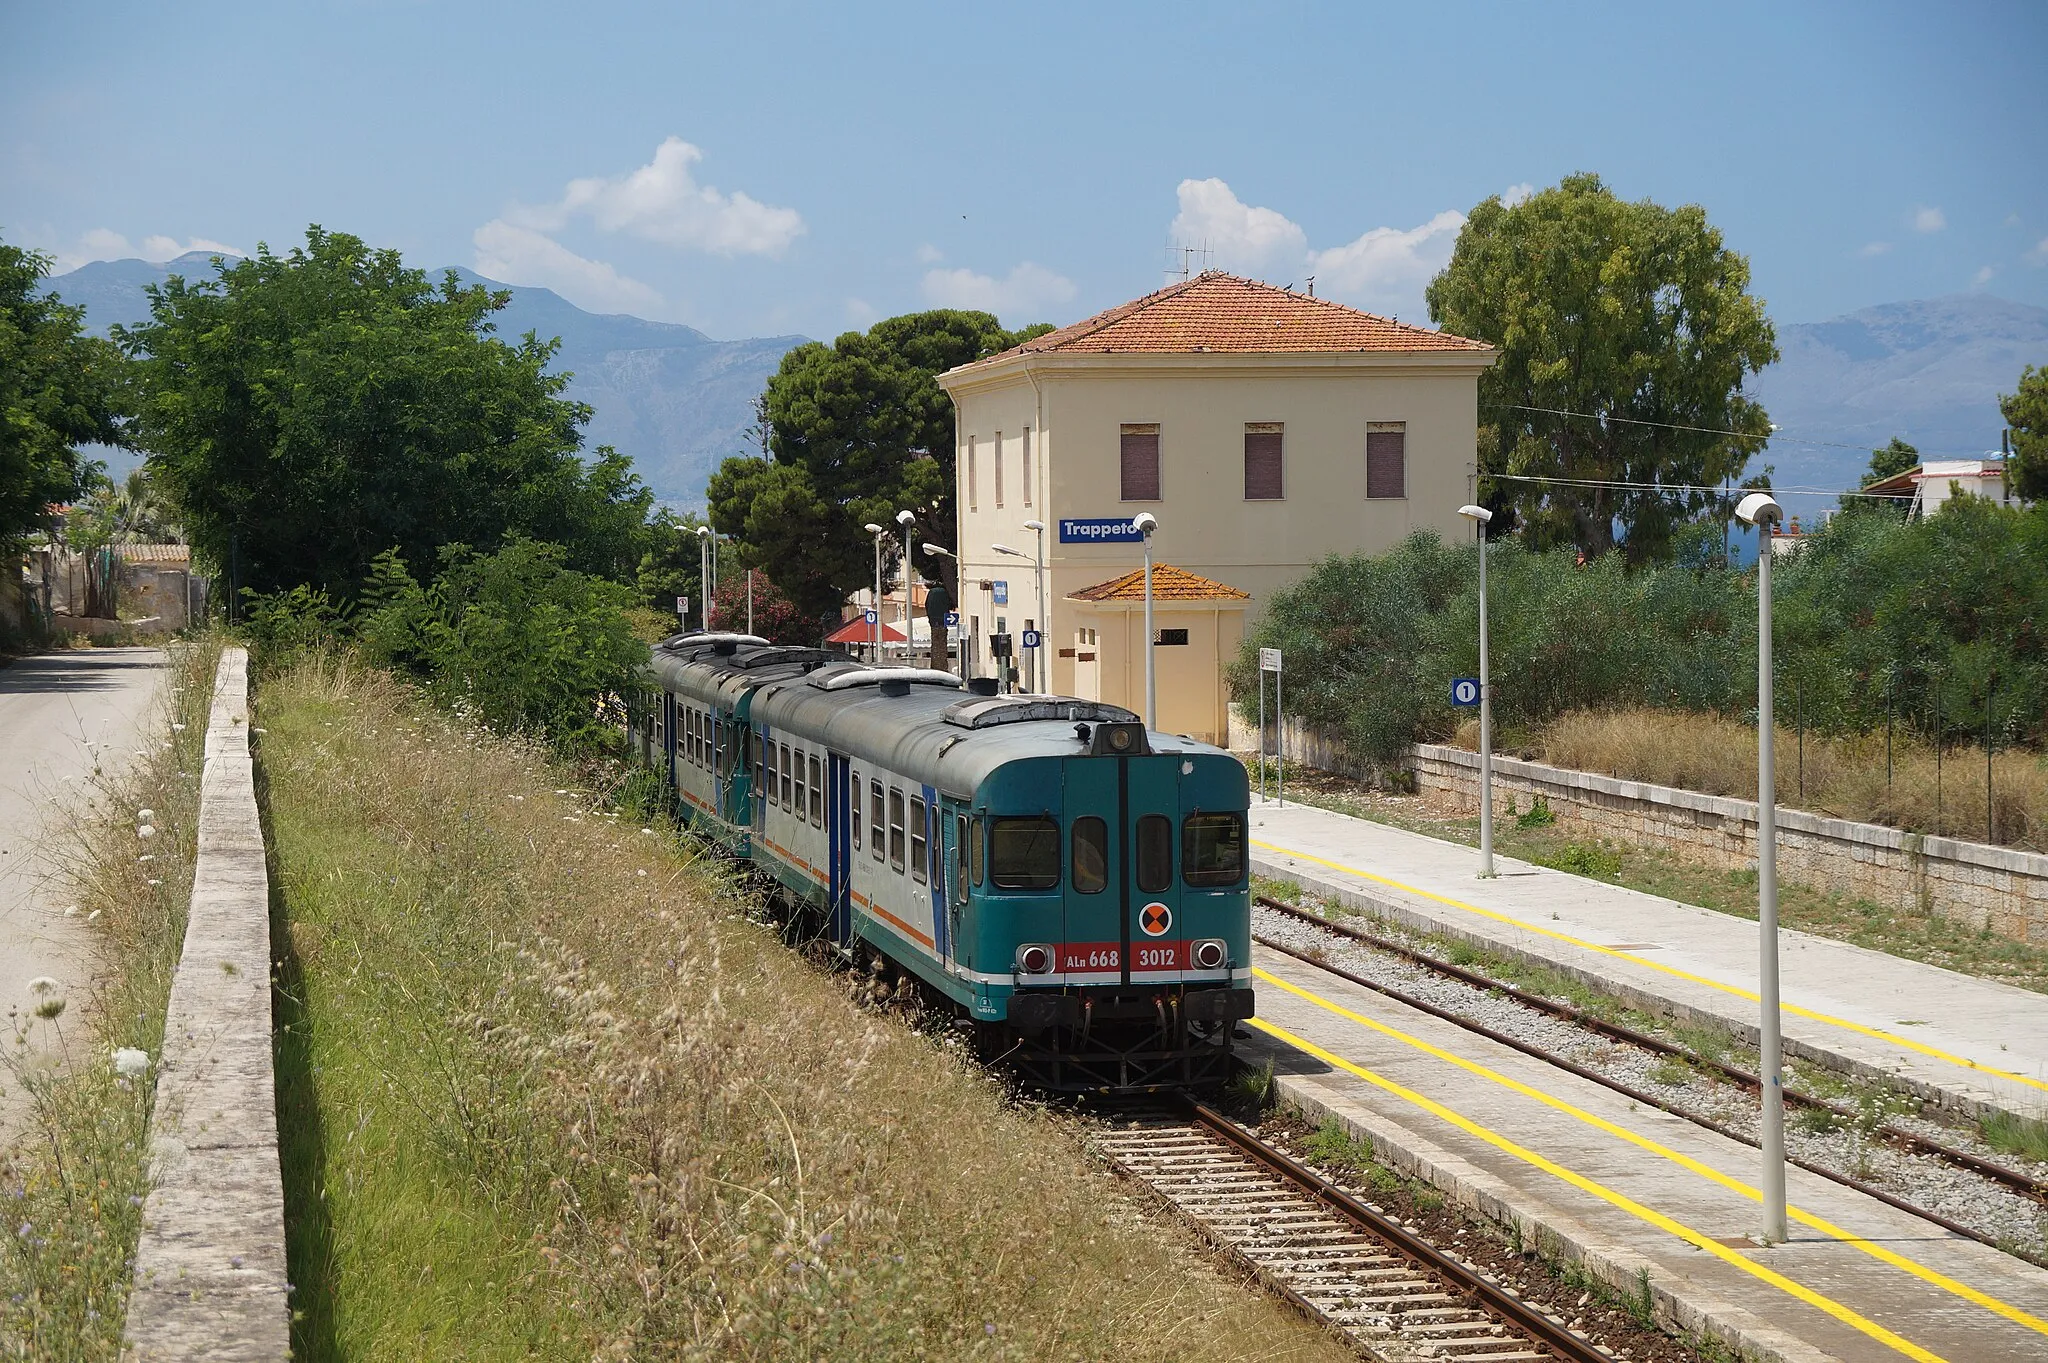 Photo showing: Bahnhof Trappeto